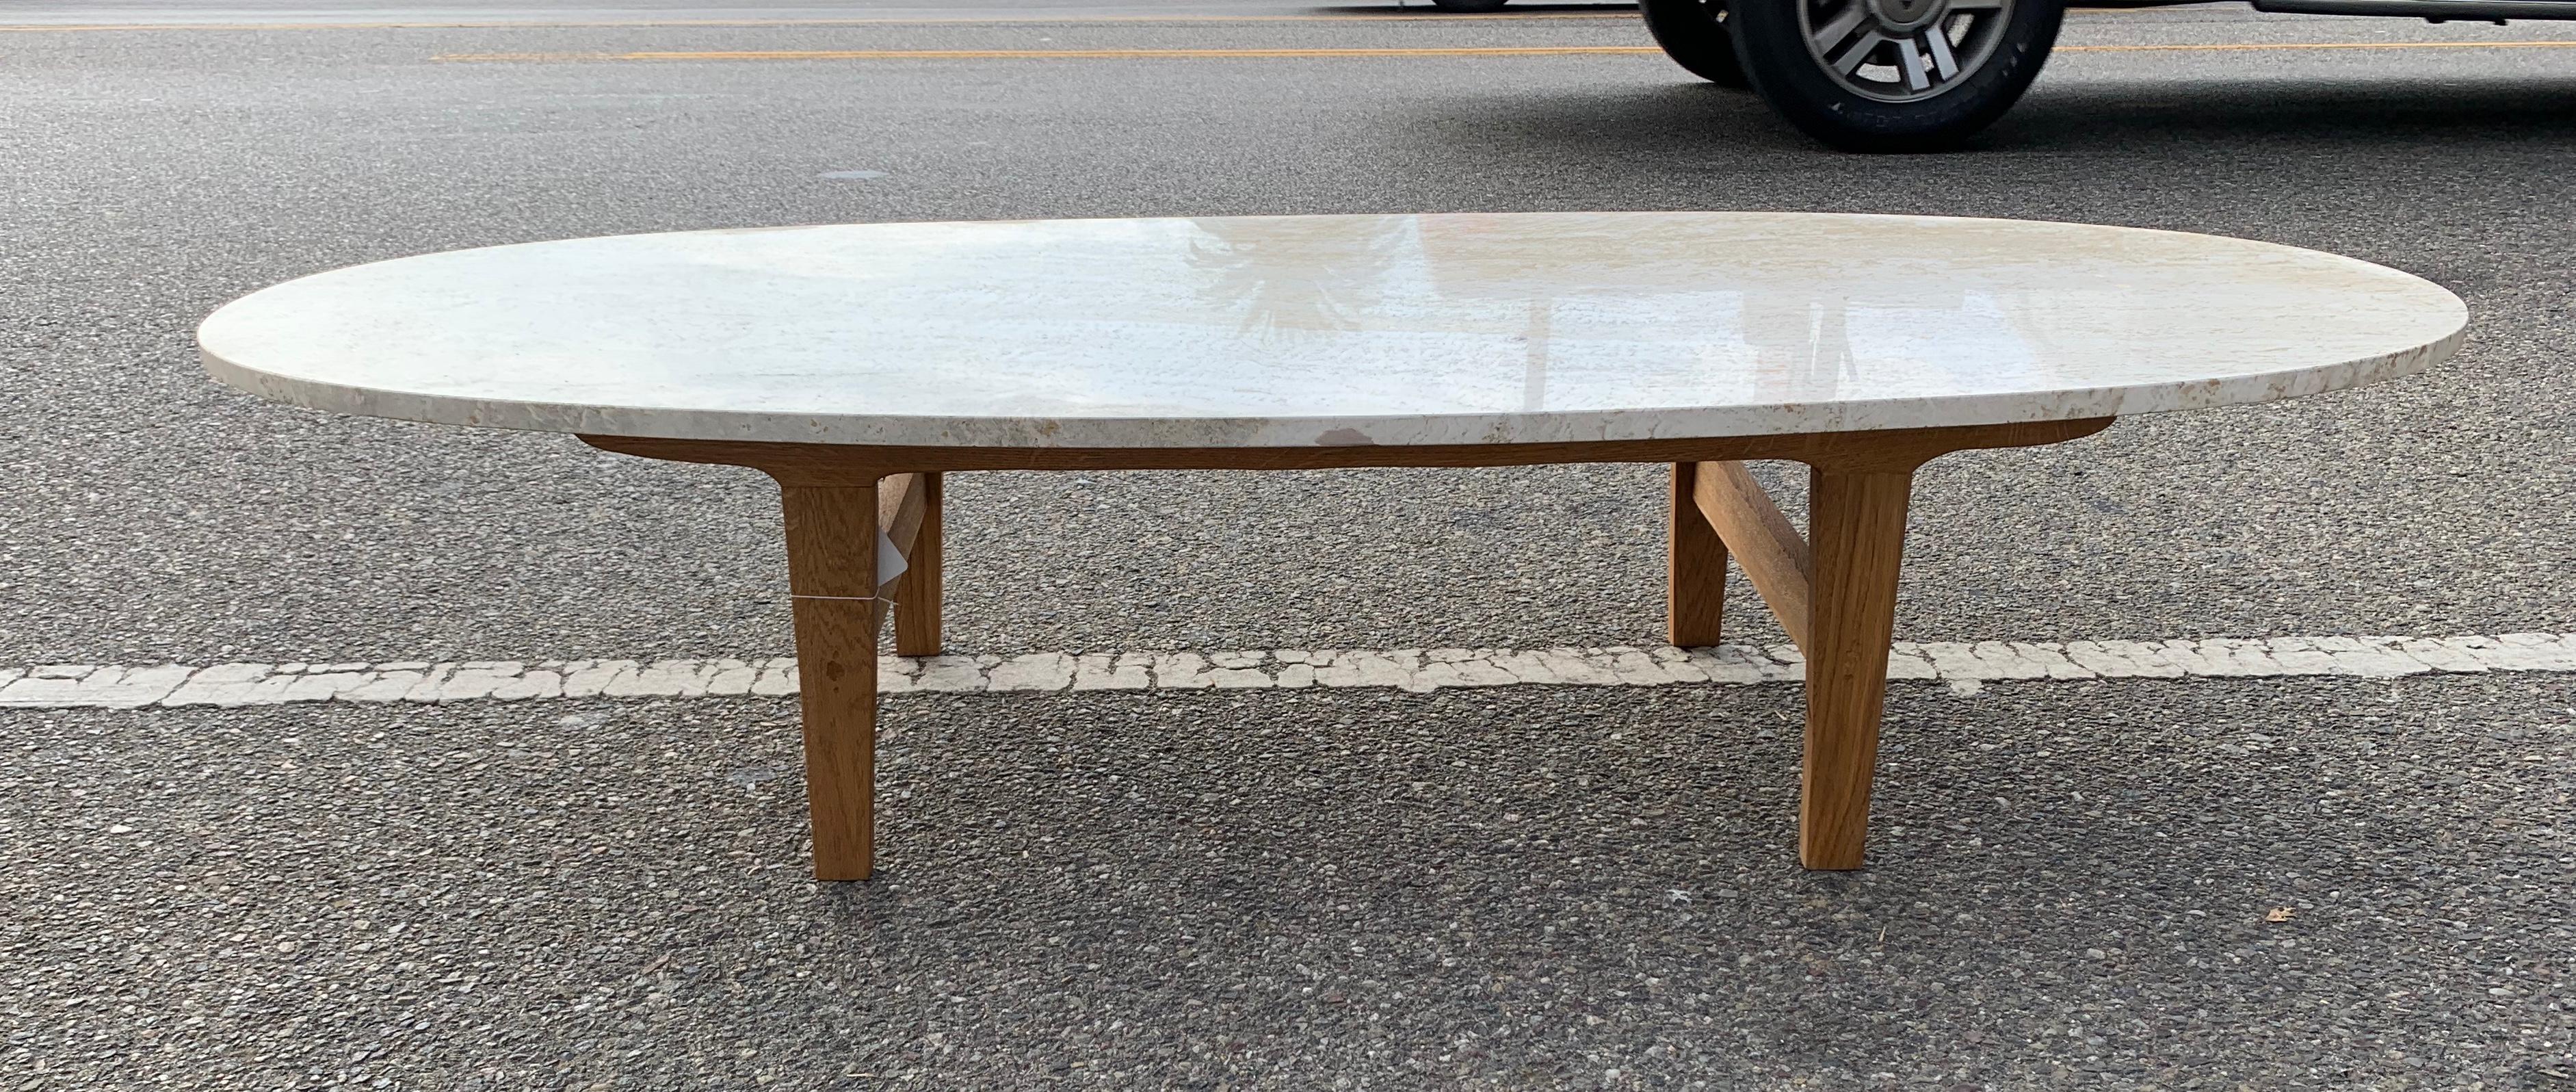 Sleek surfboard travertine top Vintage coffee table. Warm solid Travertine with solid white oak base 